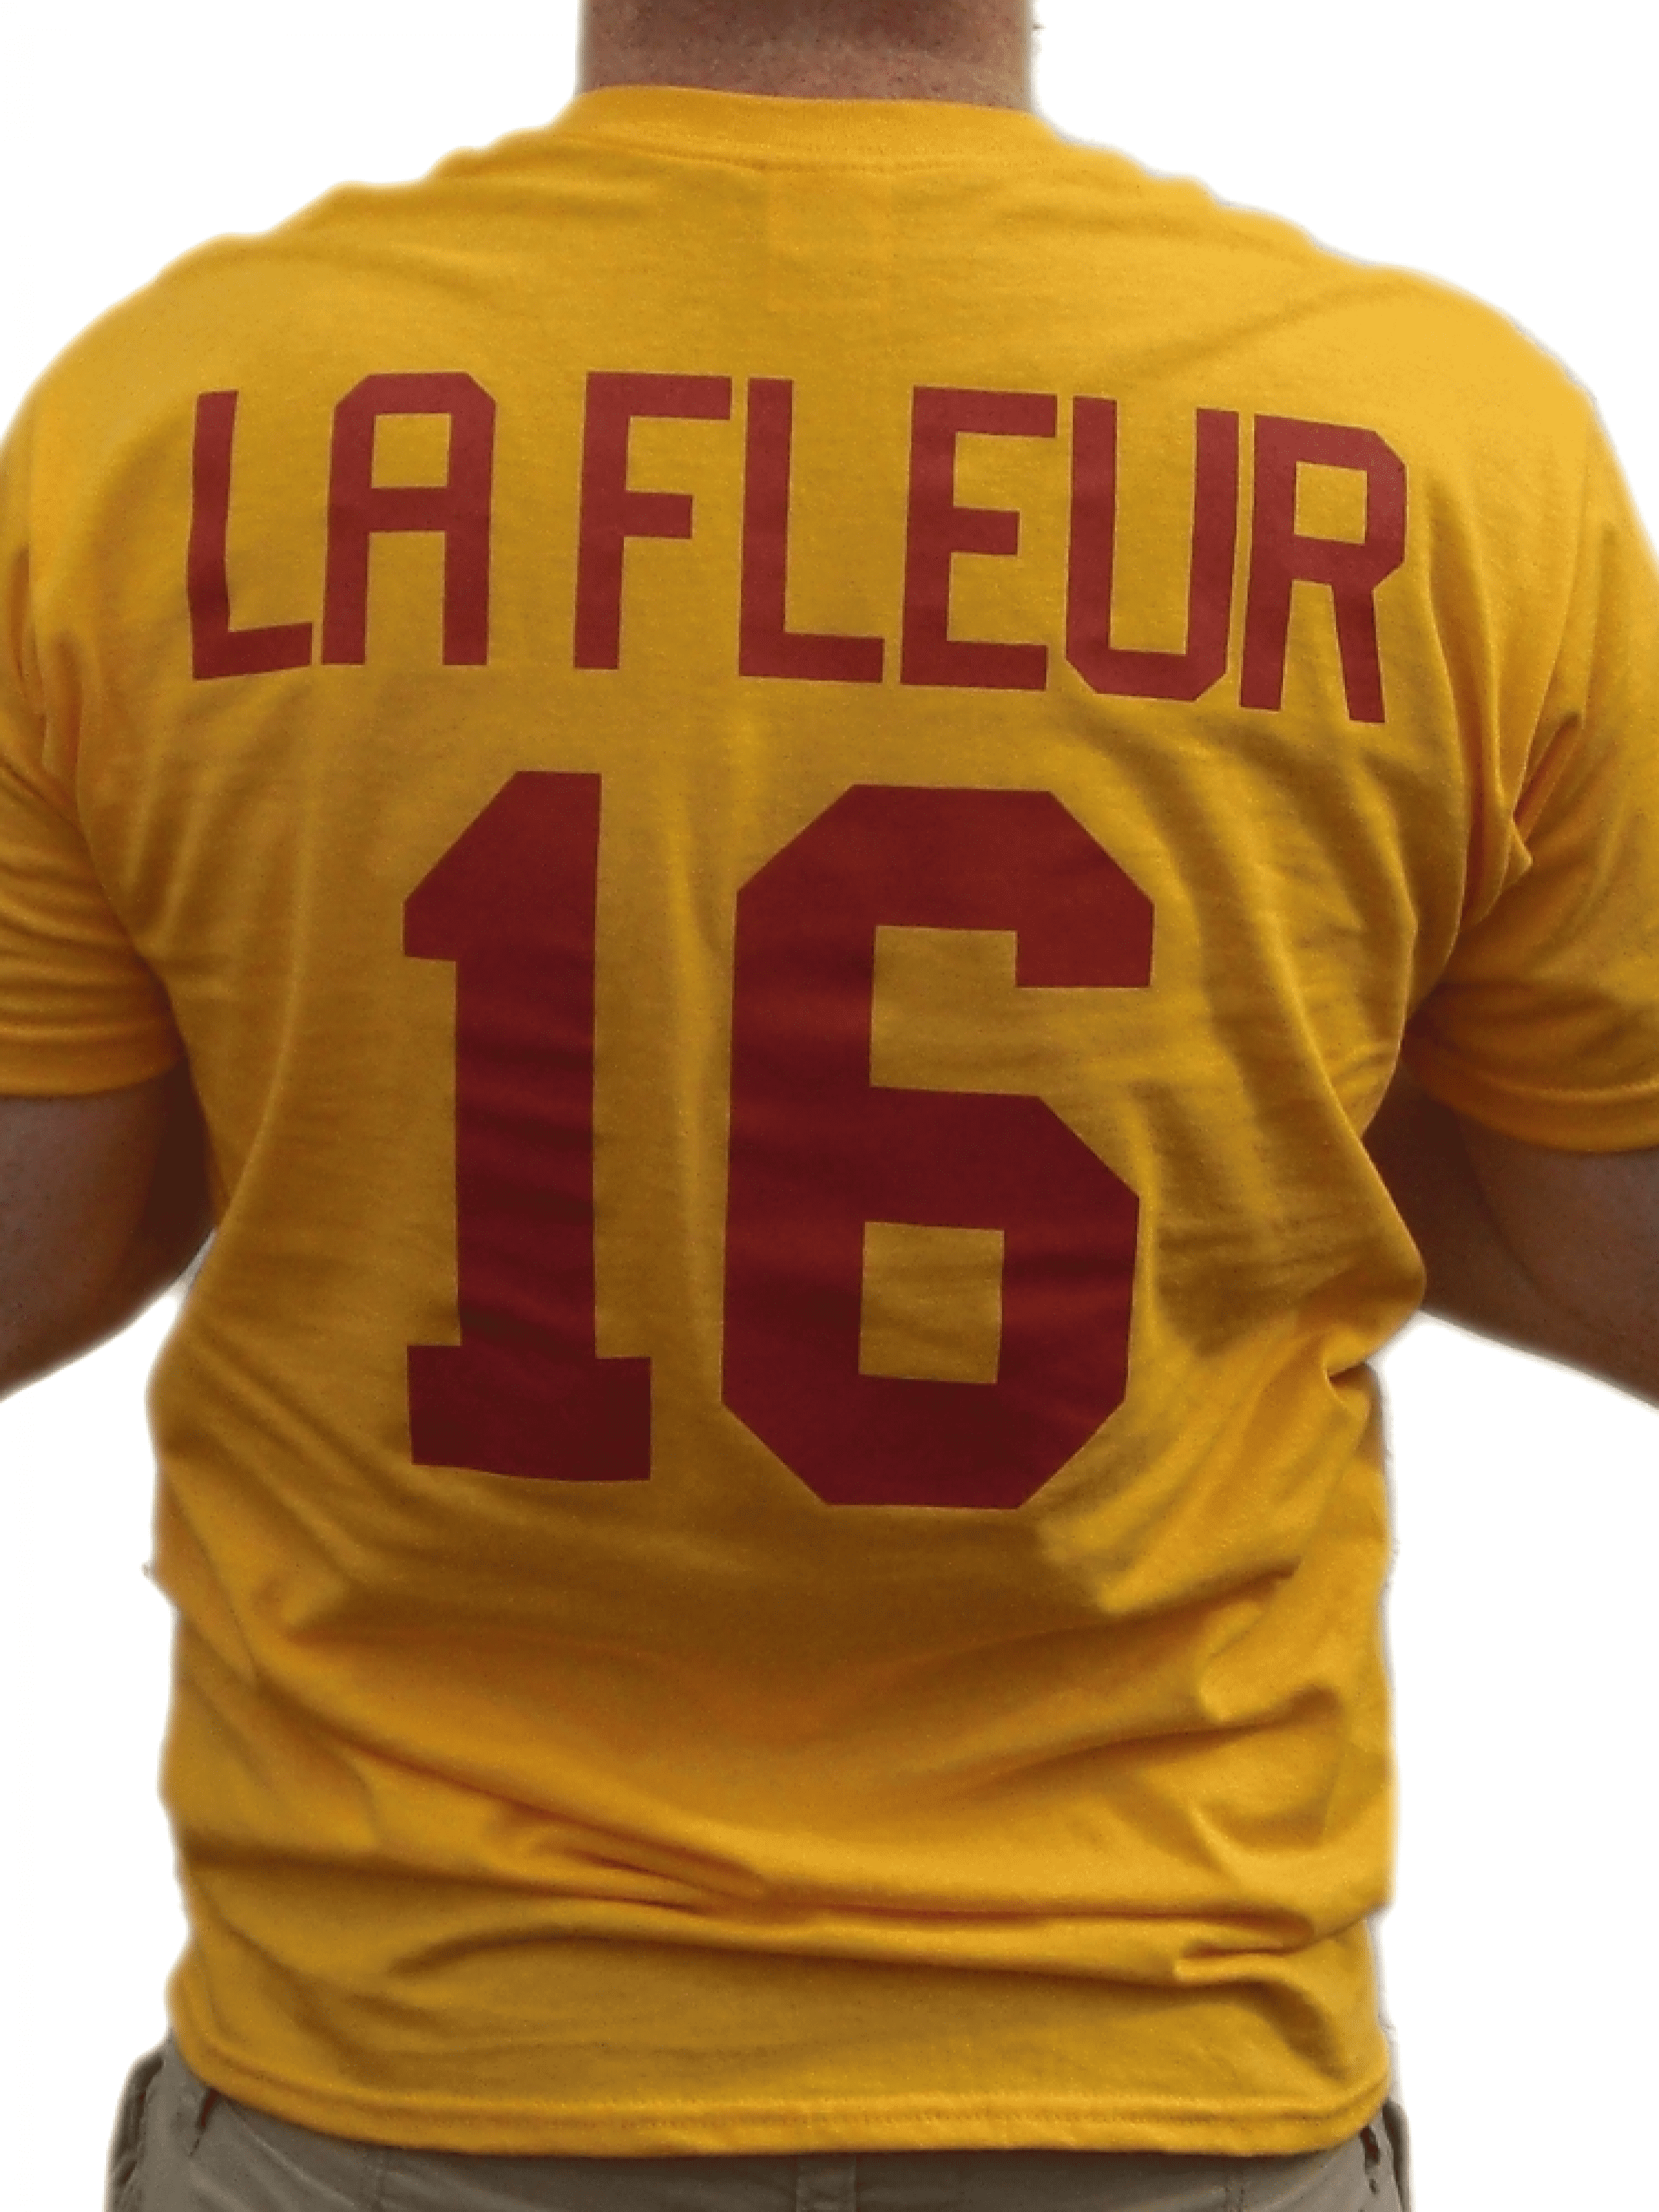 Men's Jersey Peter Lafleur #16 Average Joes Dodgeball Movie Baseball Jerseys Costume T Shirt 